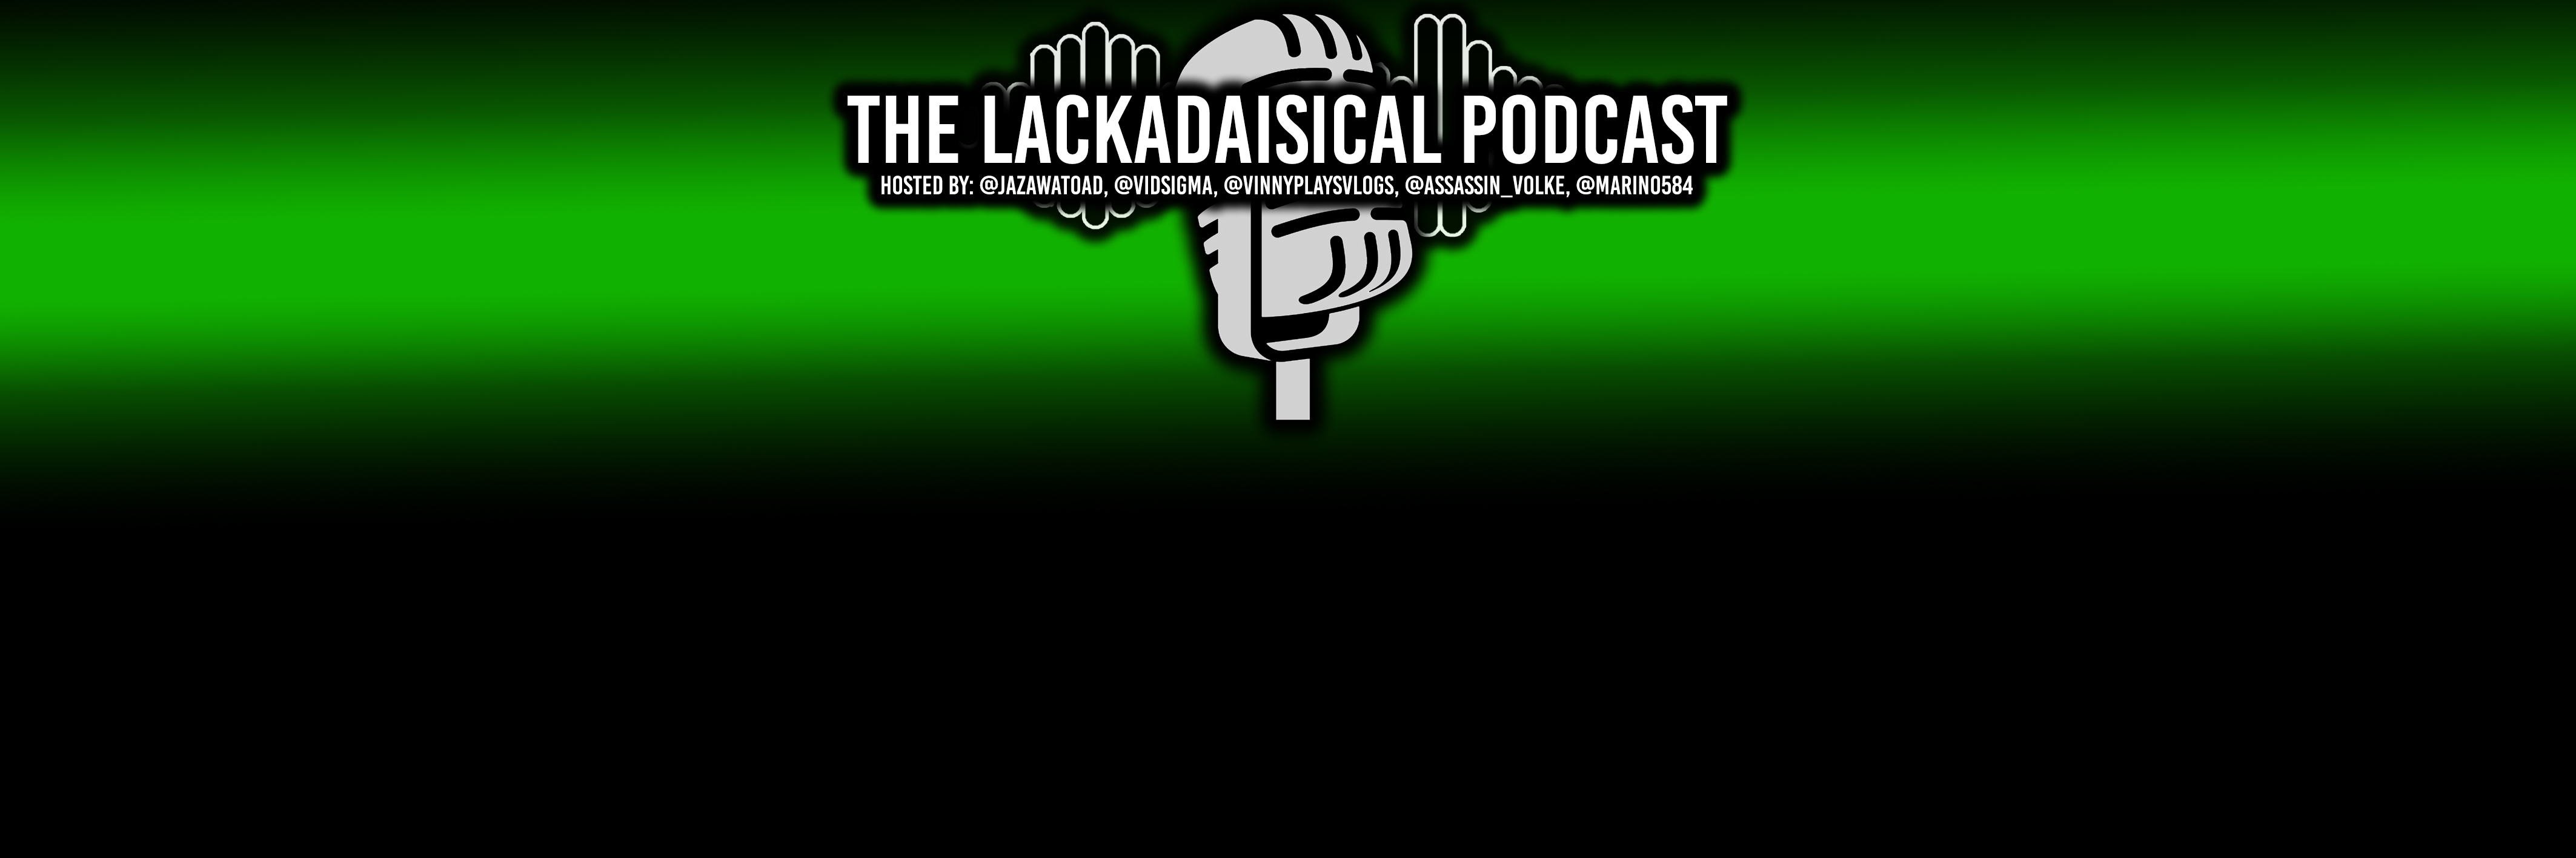 The Lackadaisical Podcast